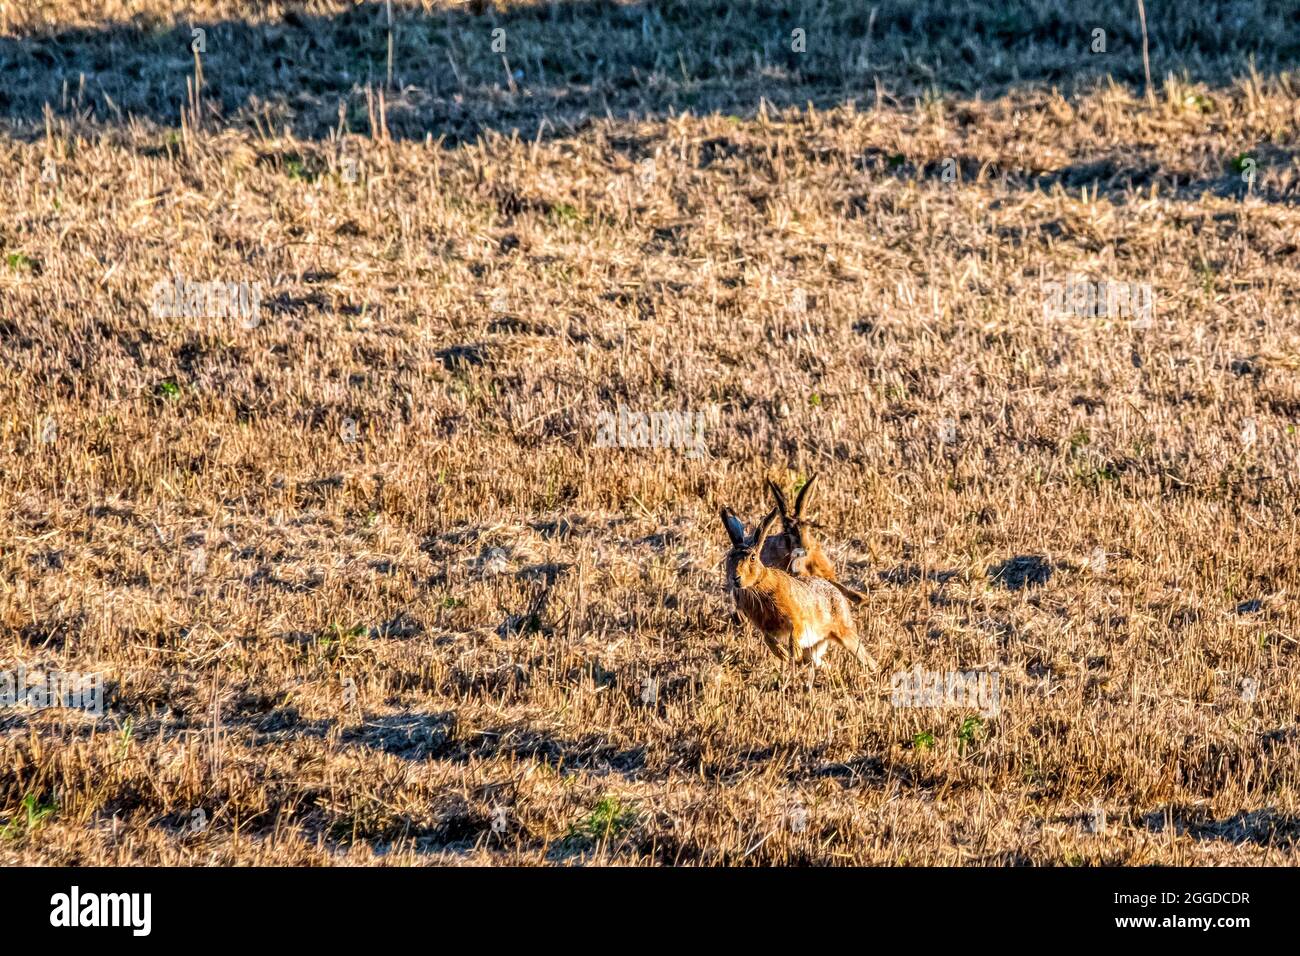 European hares, Lepus europaeus, running across a field of stubble immediately after harvest. Stock Photo